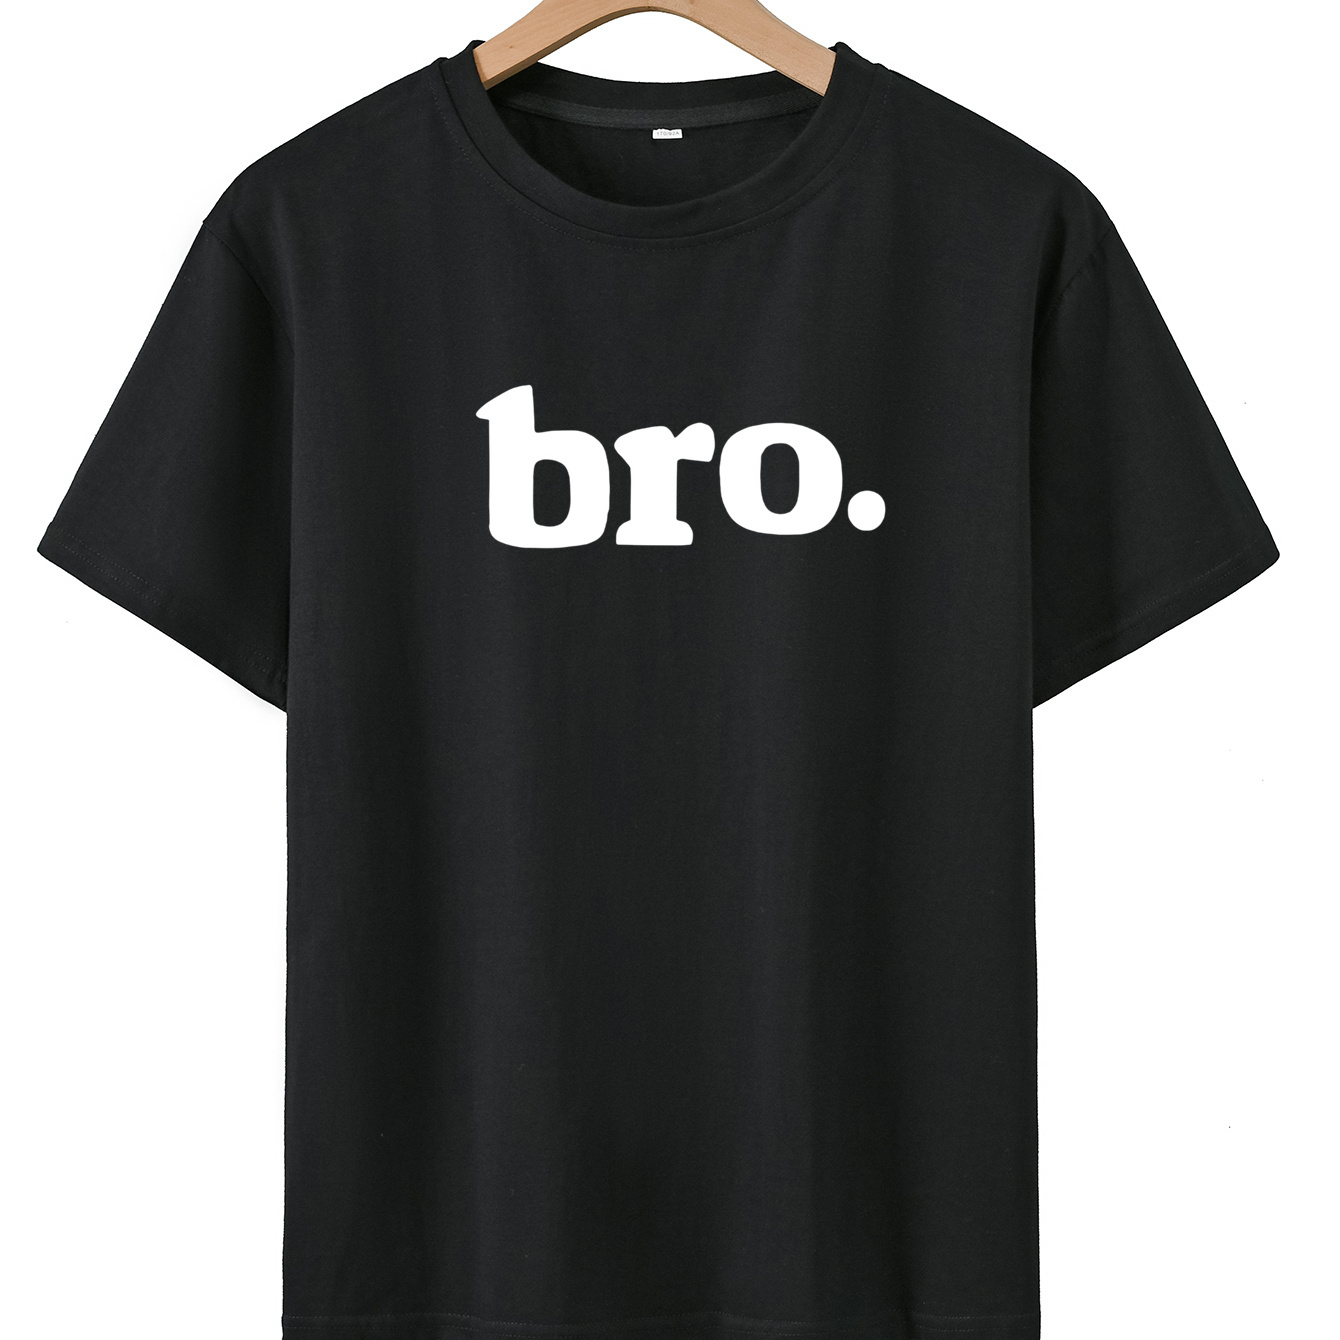 

Boy's Casual T-shirt, Bro Print Comfortable Short Sleeve Crew Neck Top, Boys Summer Clothing